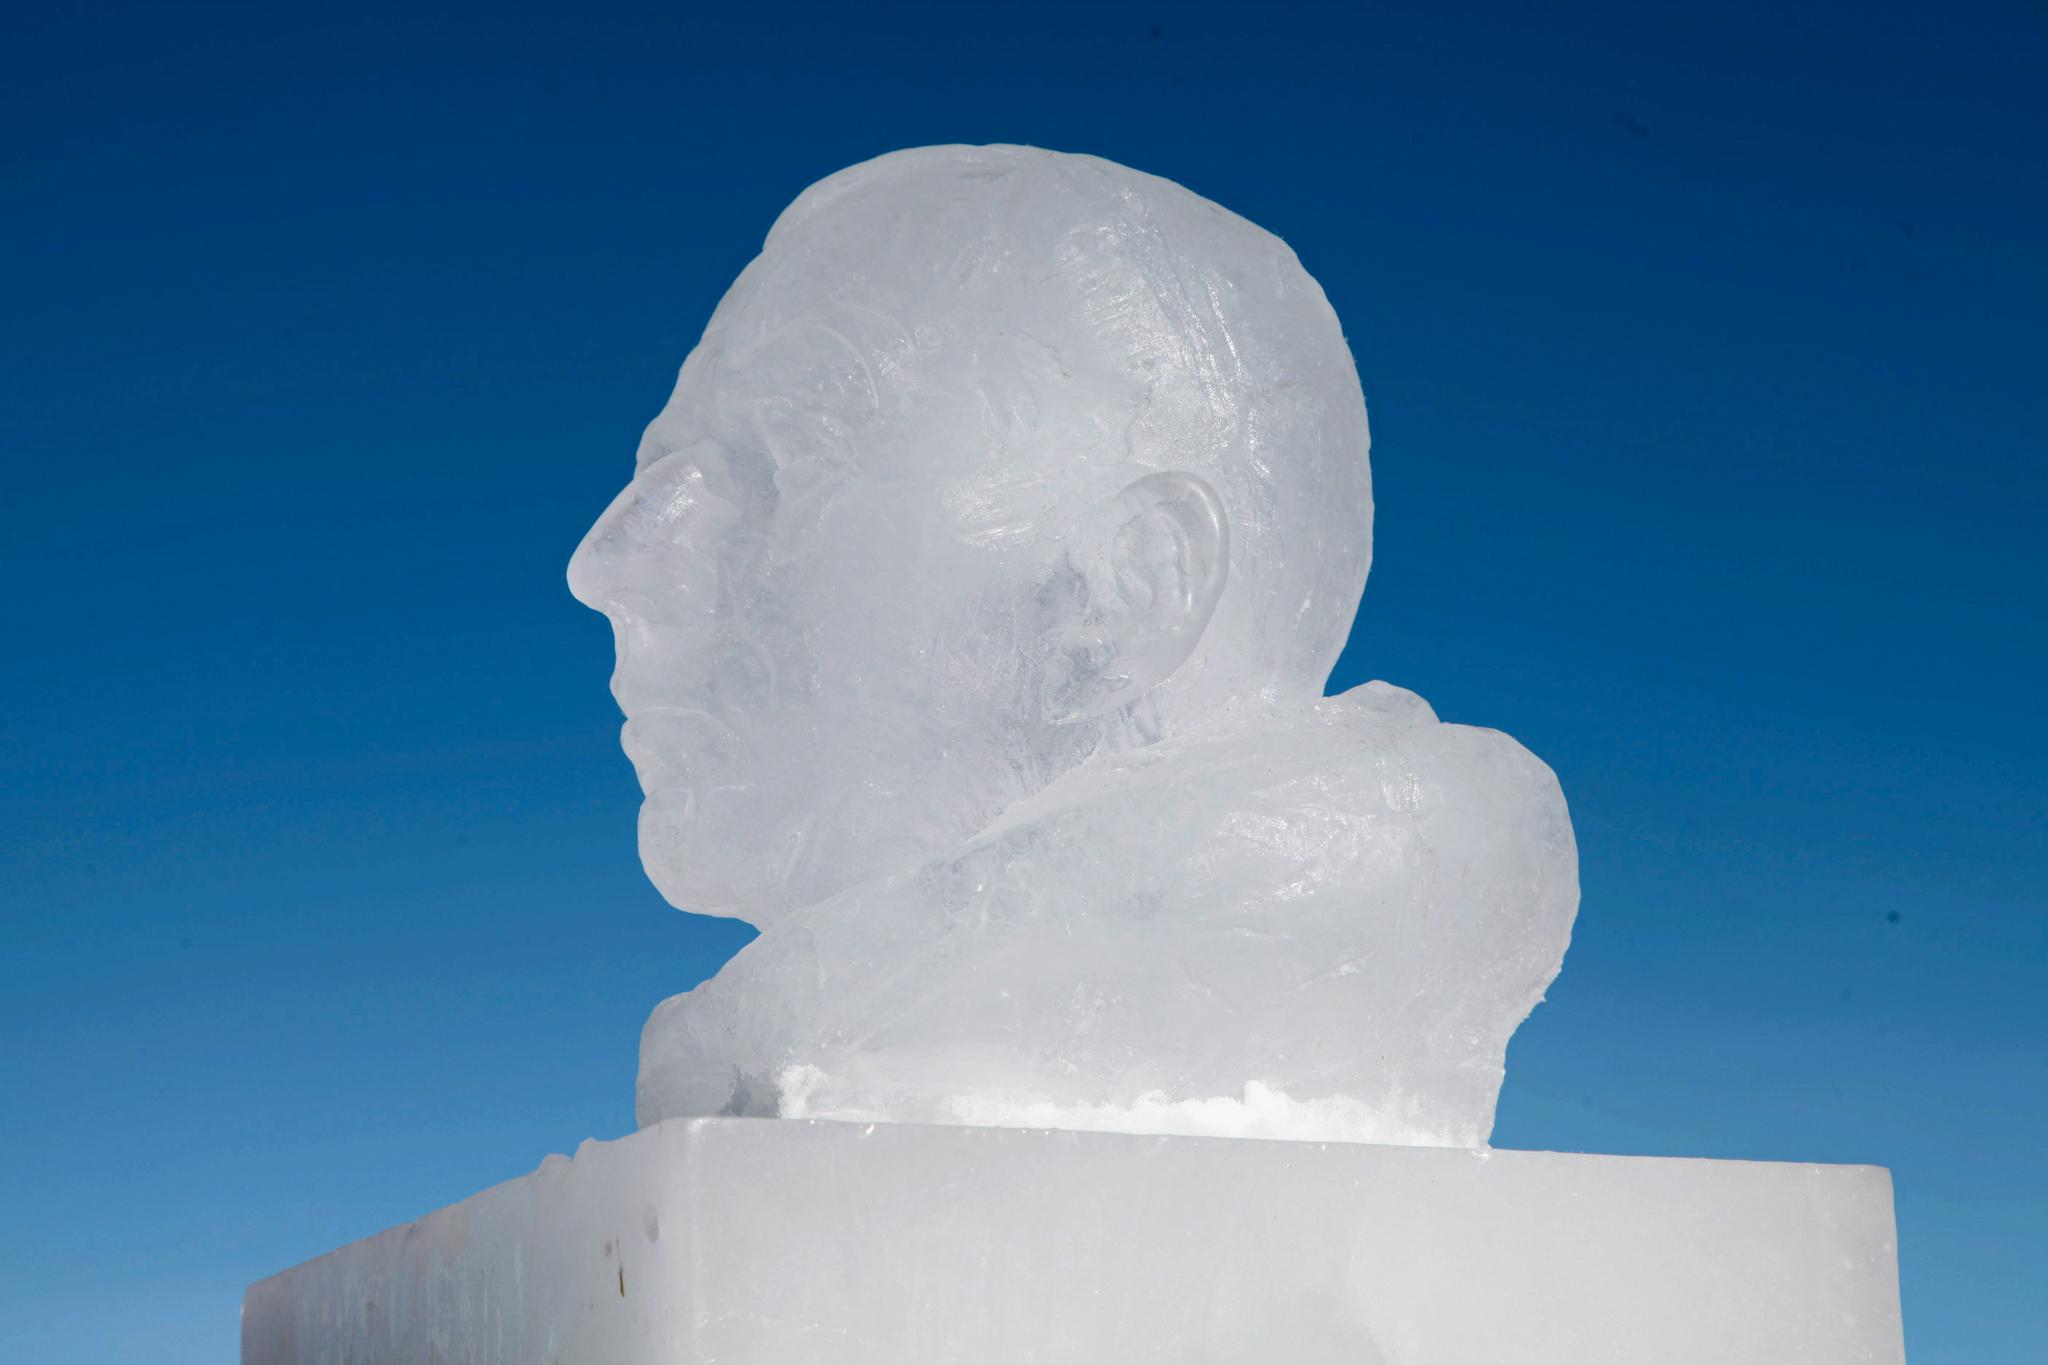 Roald Amundsen i isform på Sydpolen, laget av billedhugger Håkon Anton Fagerås.